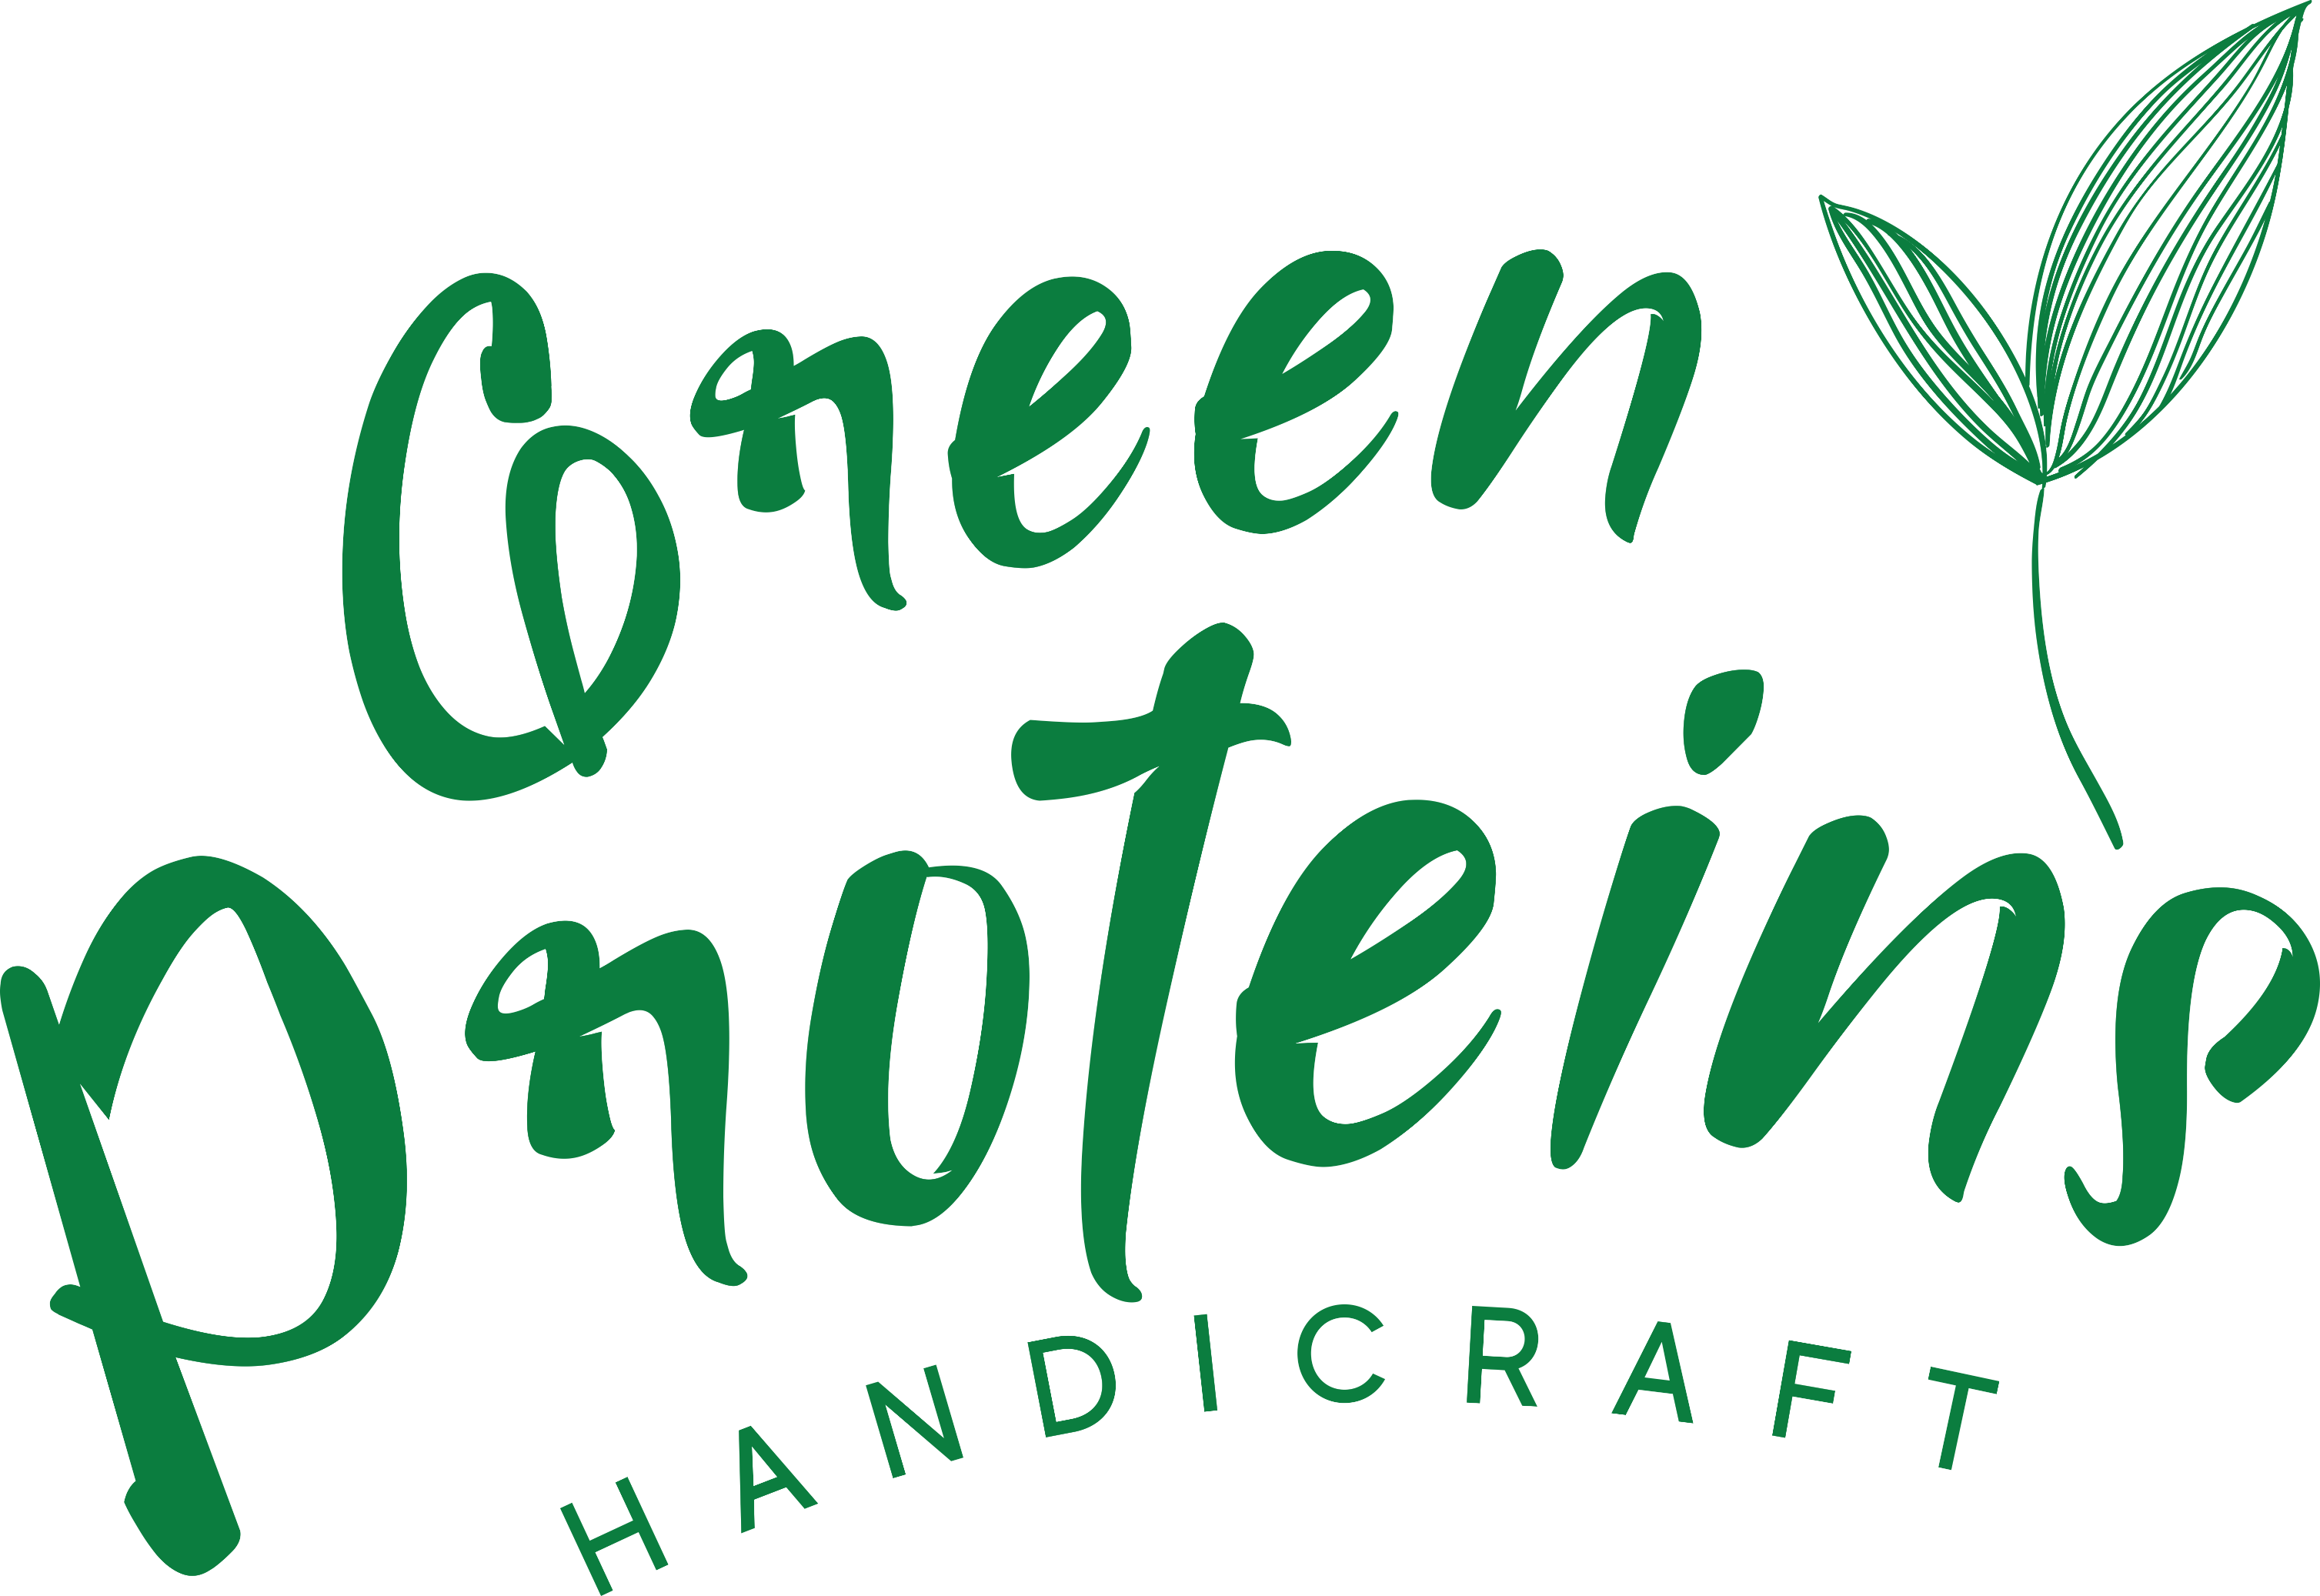 Green Protein - из подсолнуха и конопли